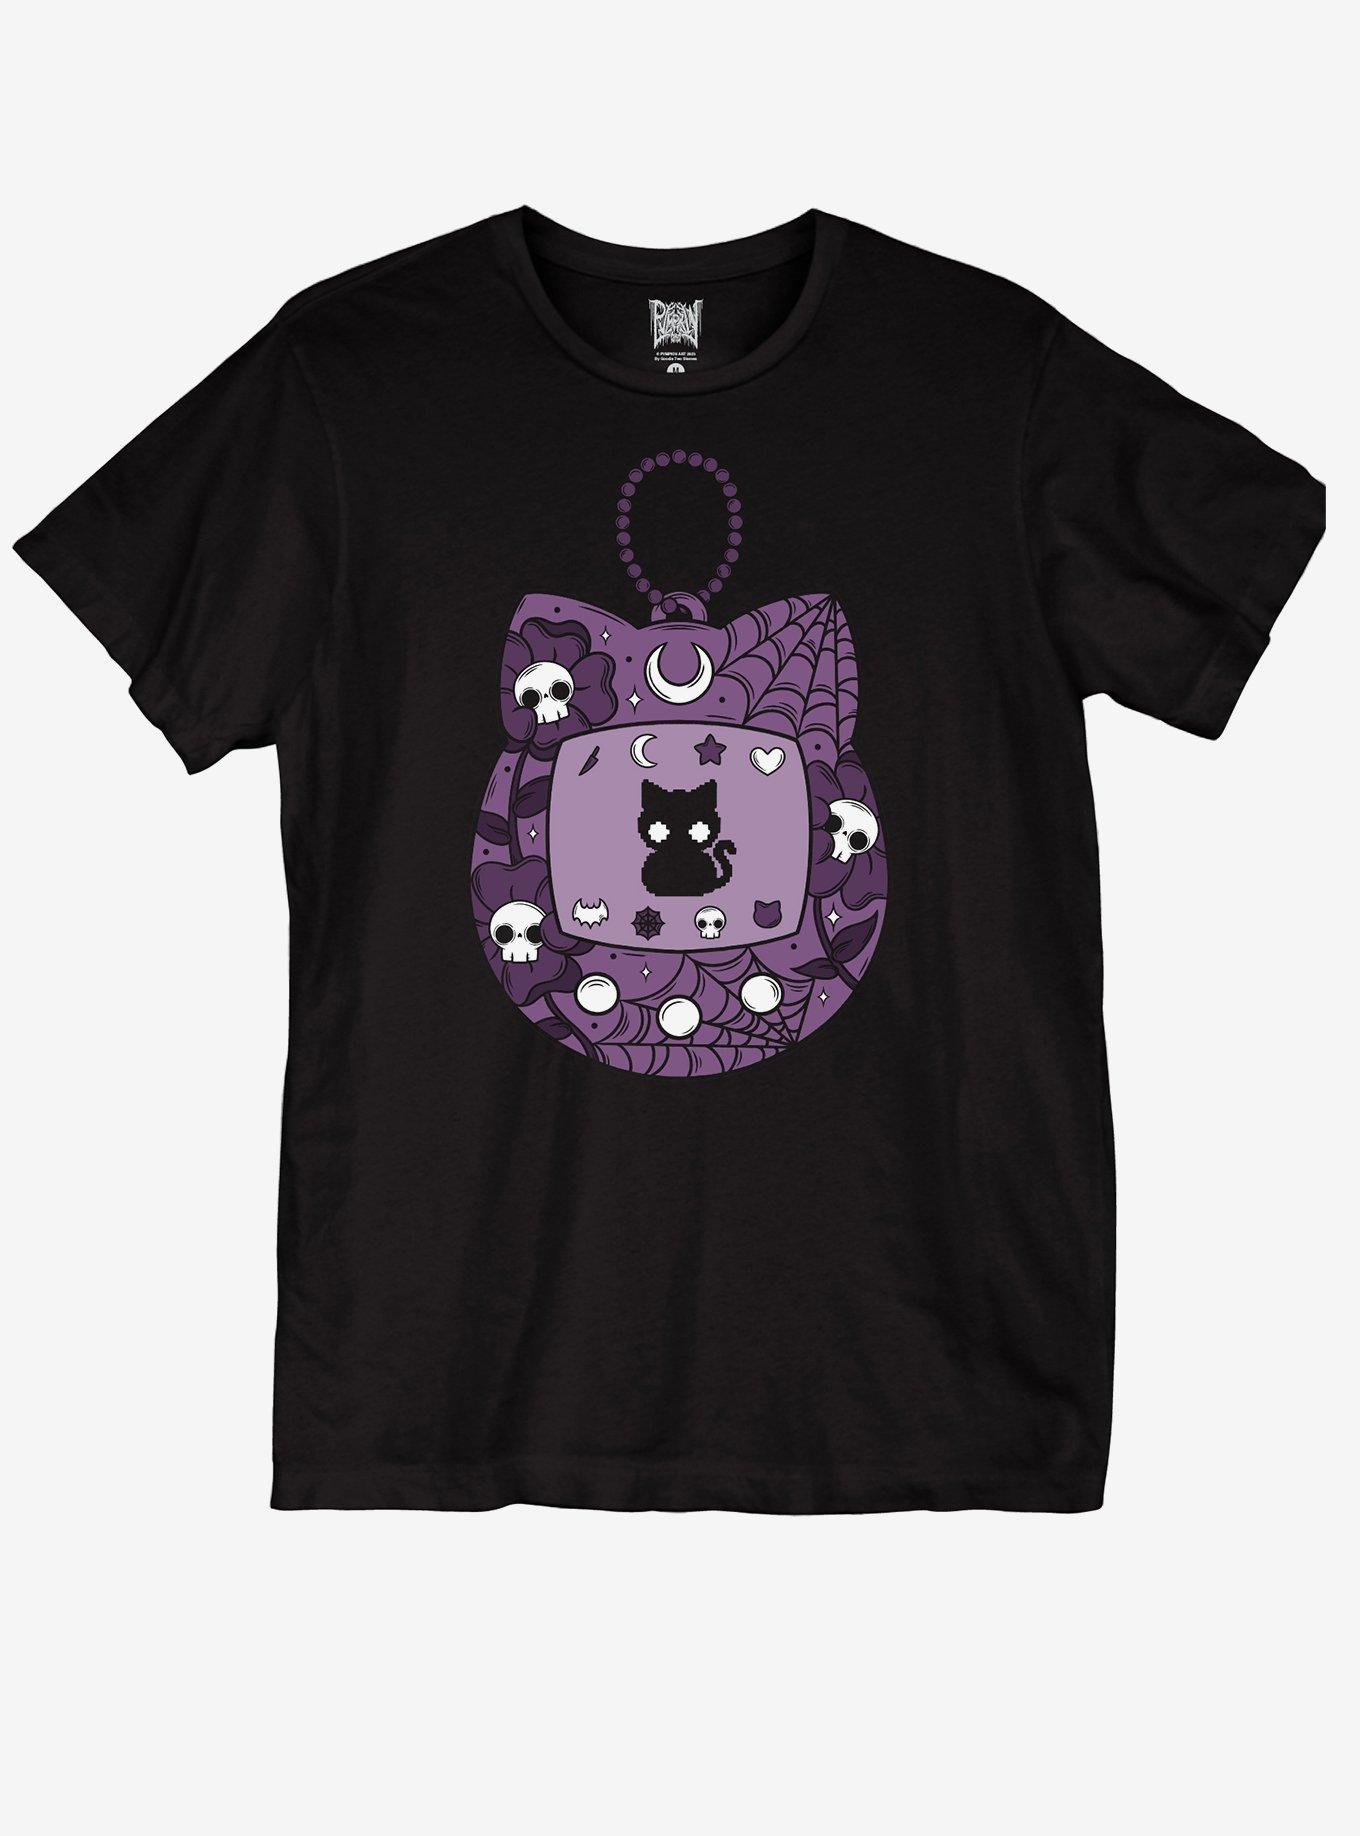 Black Cat Digital Pet T-Shirt By Pvmpkin, BLACK, hi-res